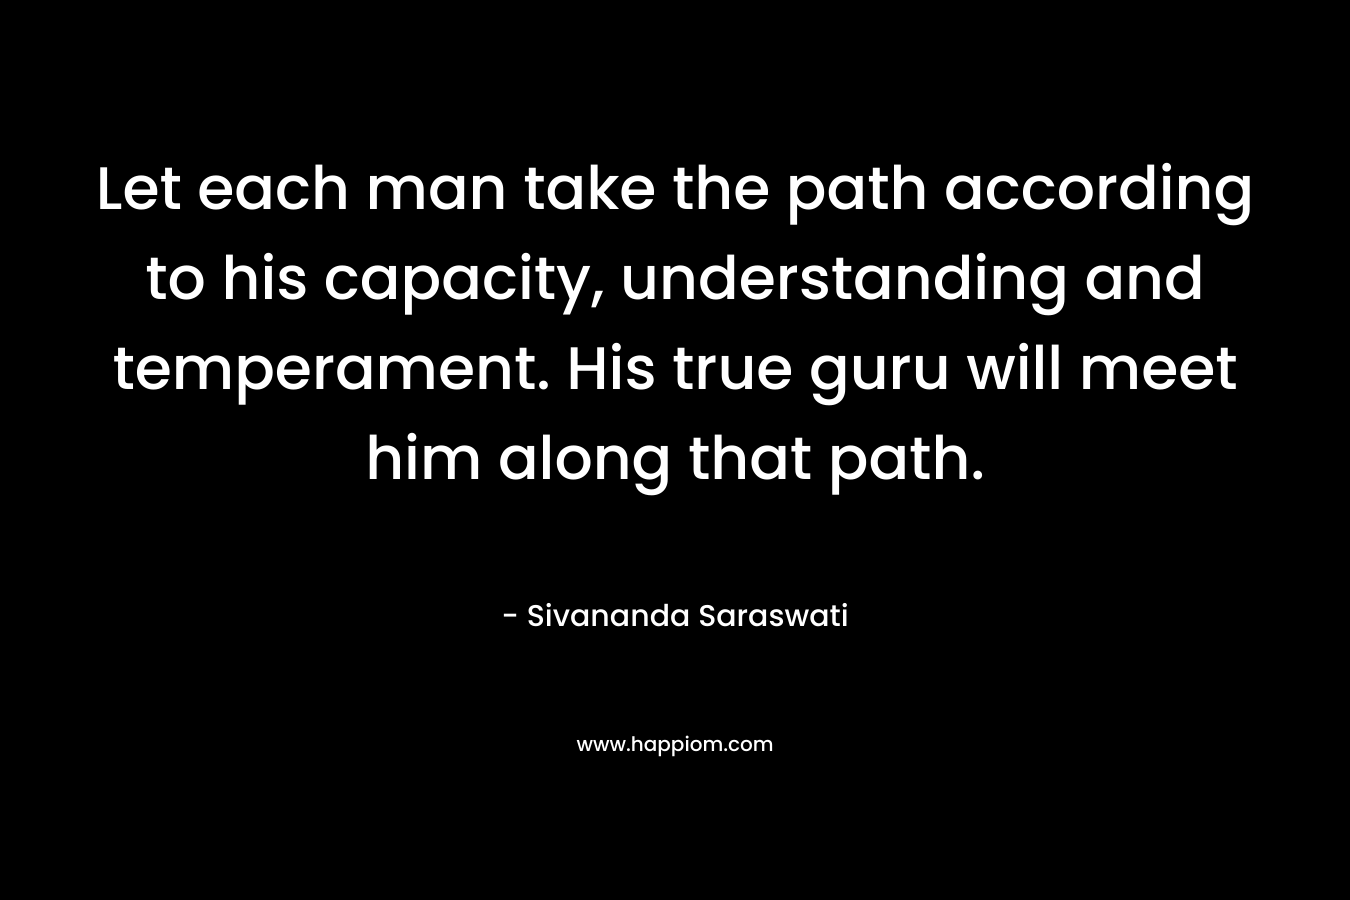 Let each man take the path according to his capacity, understanding and temperament. His true guru will meet him along that path. – Sivananda Saraswati